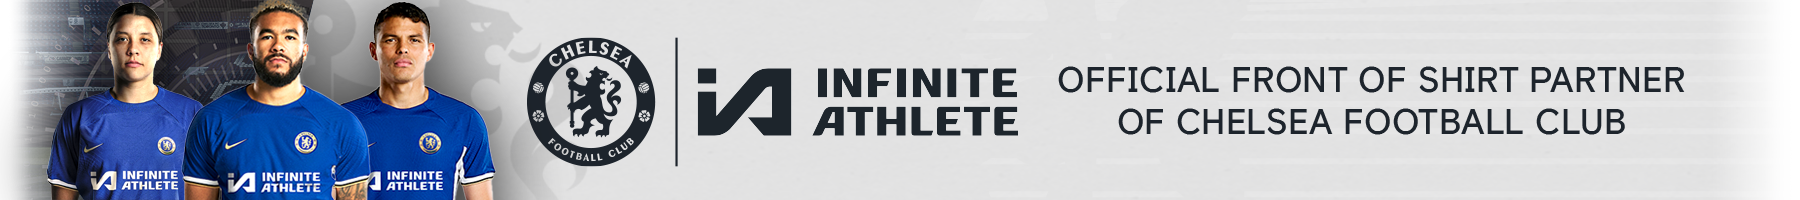 Infinite Athlete Chelsea Announcement Banner